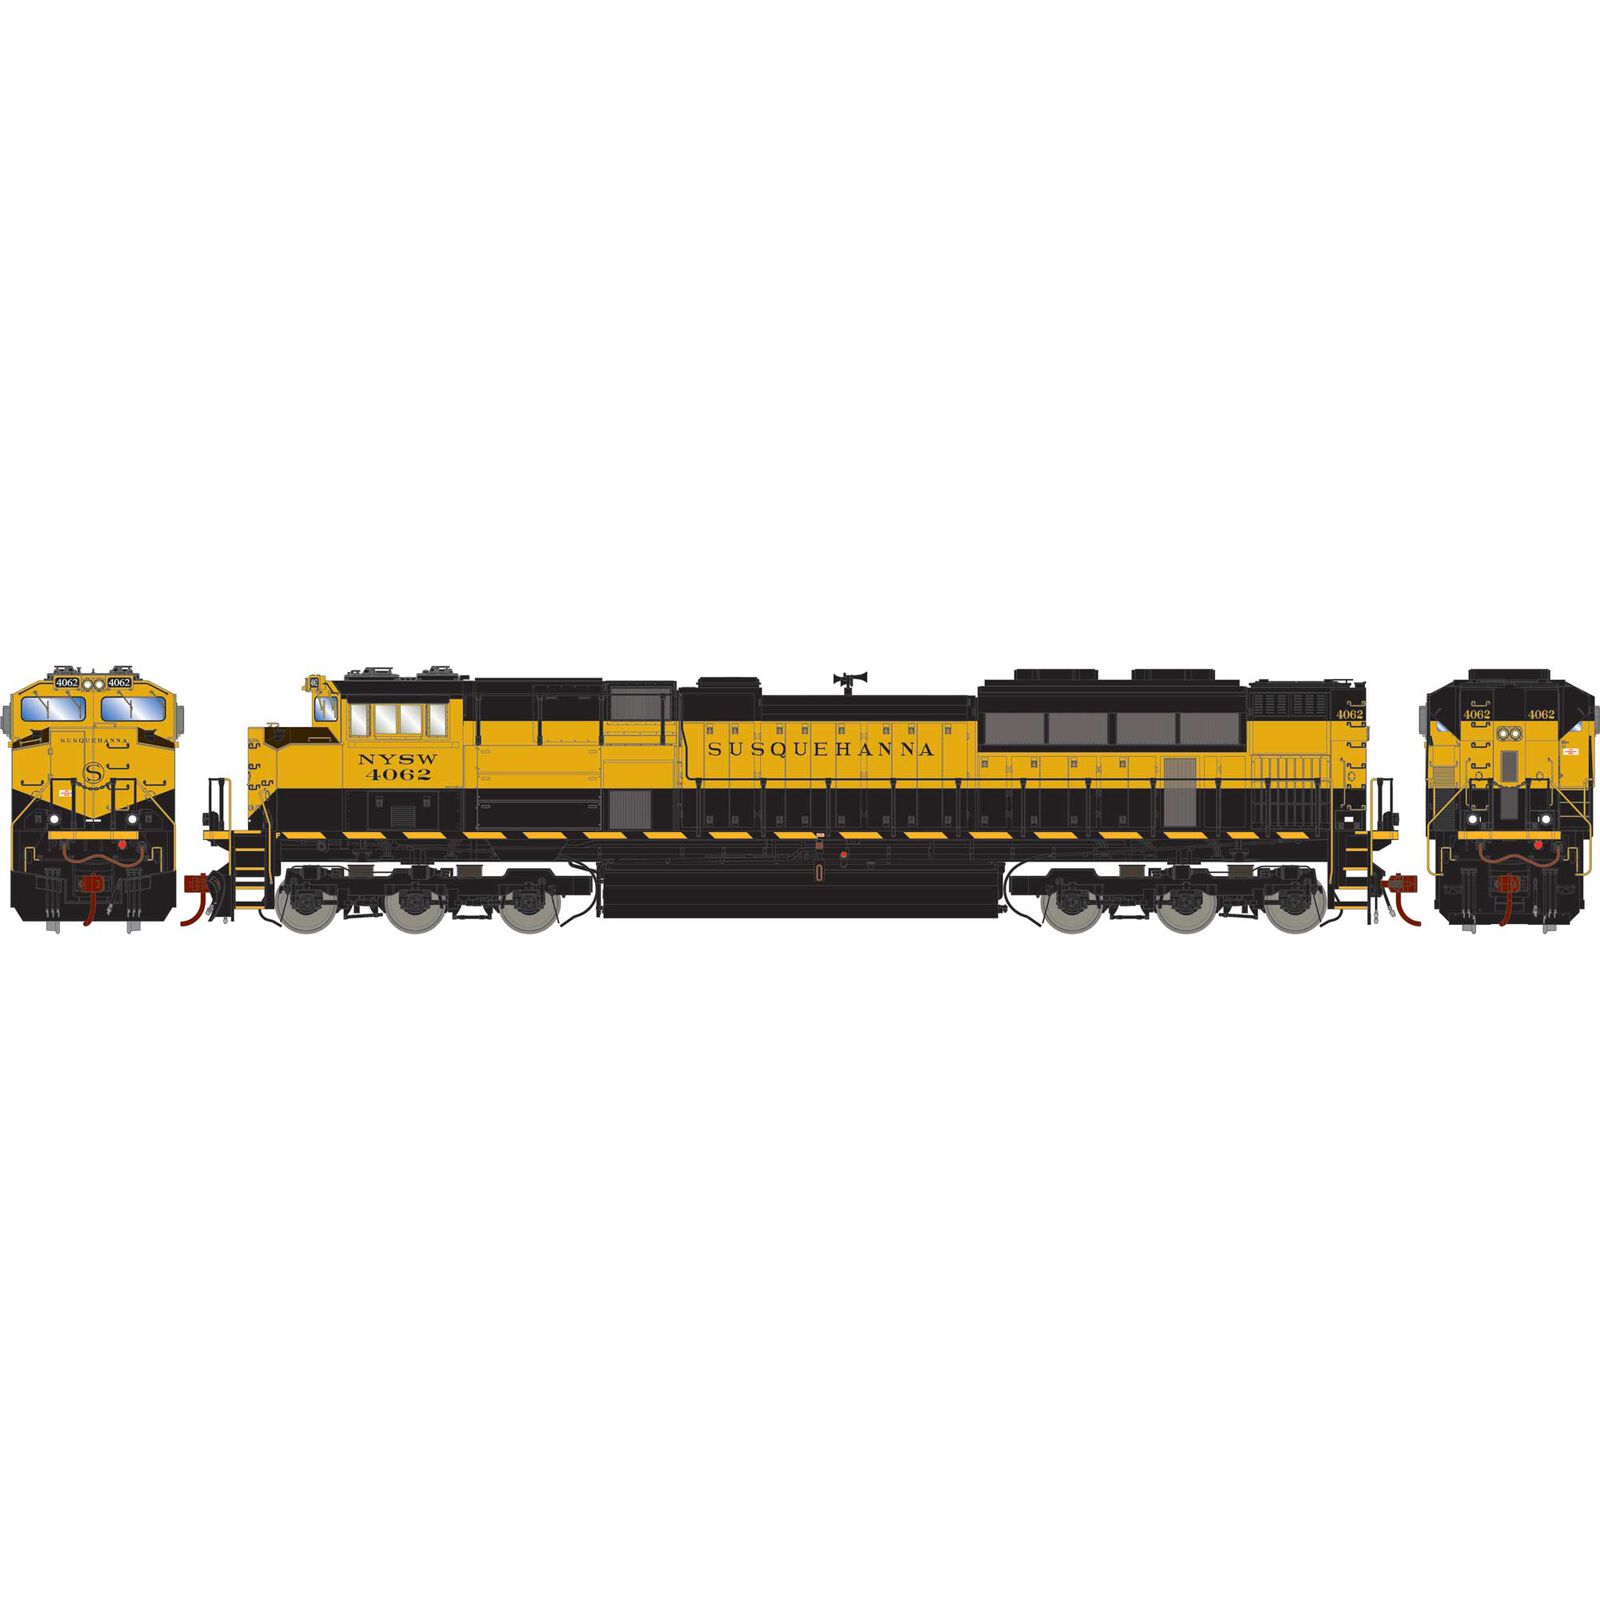 HO SD70M-2 Locomotive, NYS&W #4062